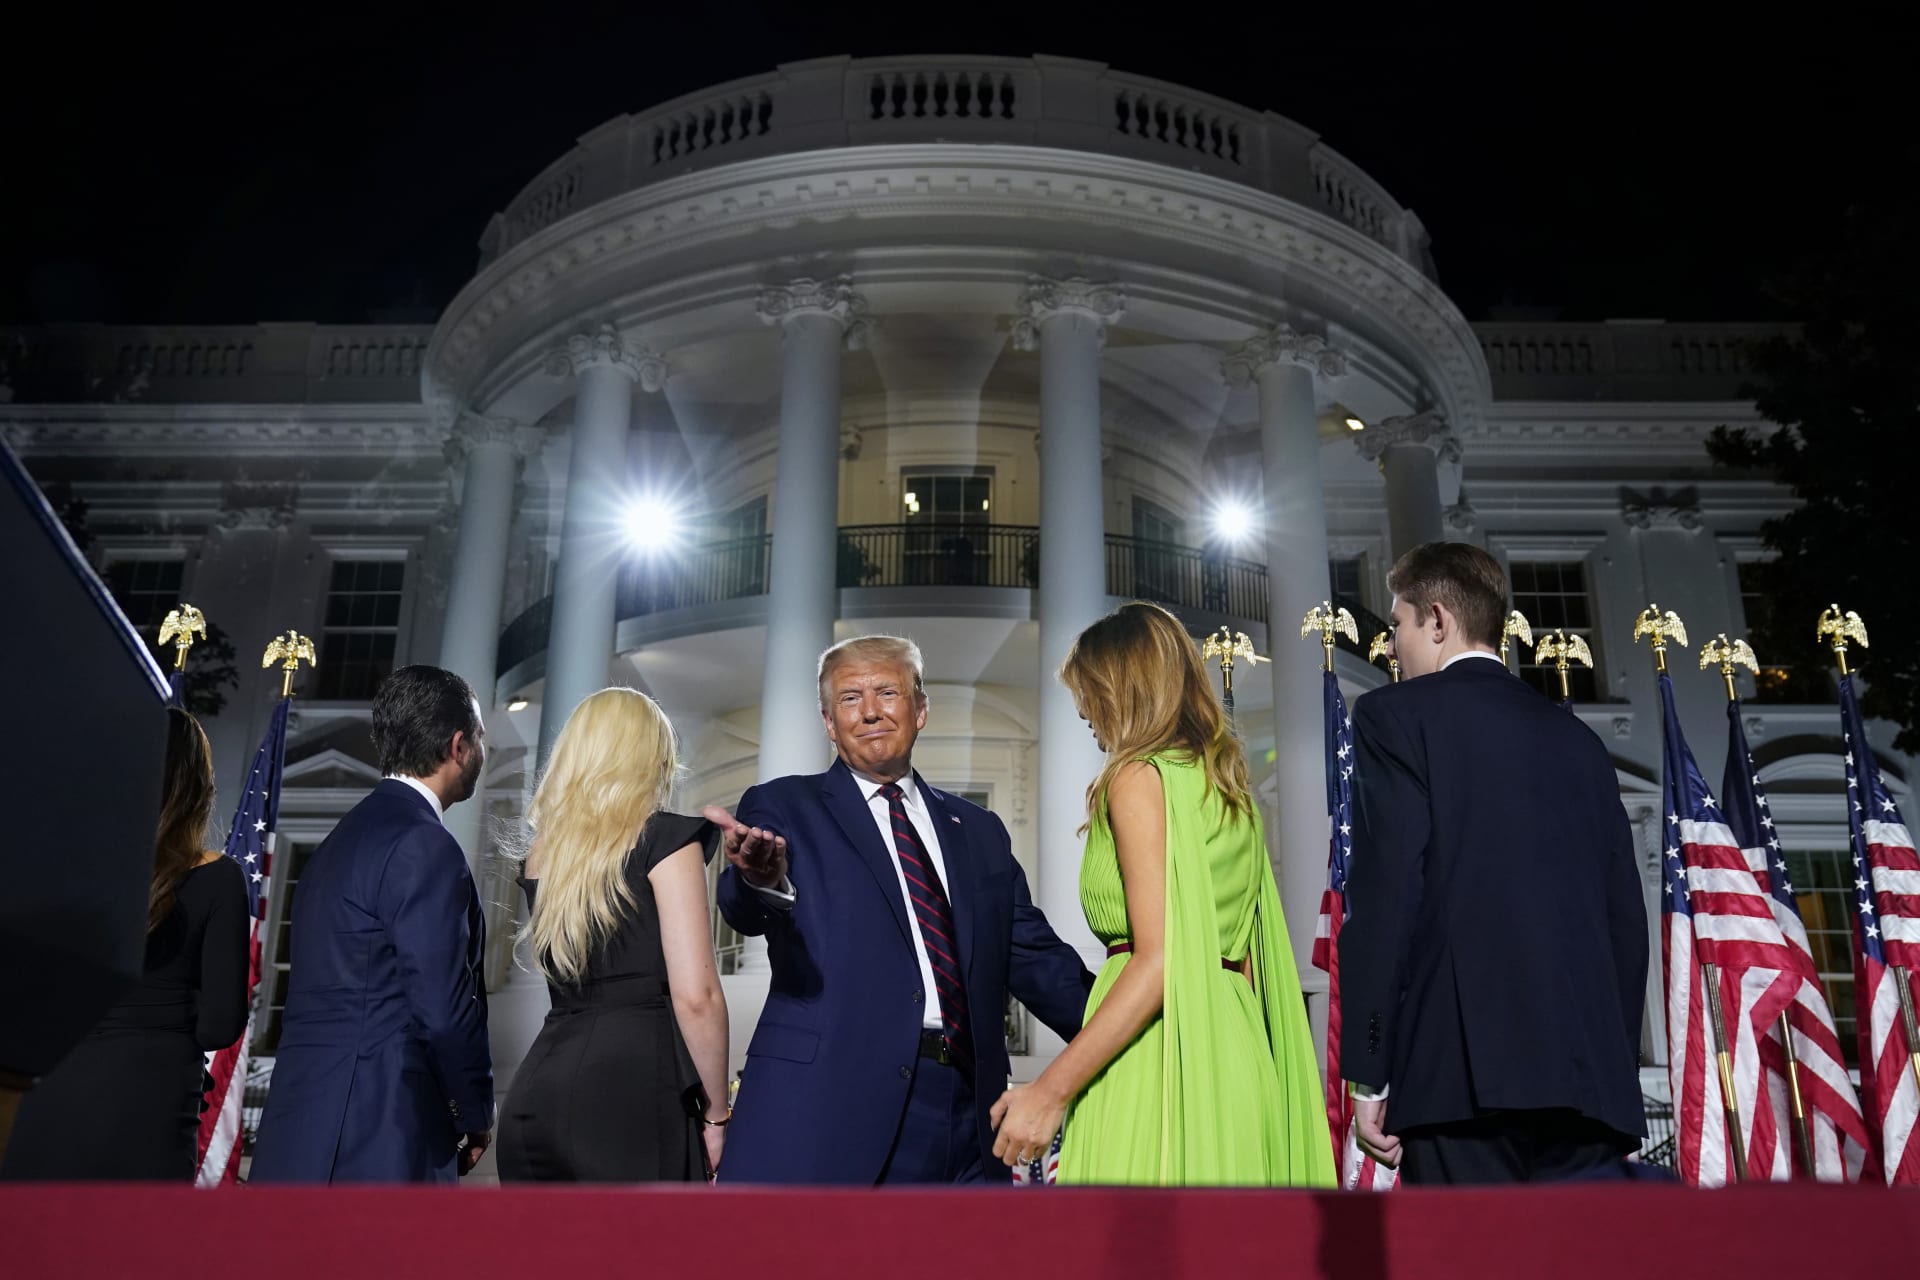 Zleva: Donald Trump Jr., Tiffany Trumpová, prezident Donald Trump, první dáma Melania Trumpová a Barron Trump